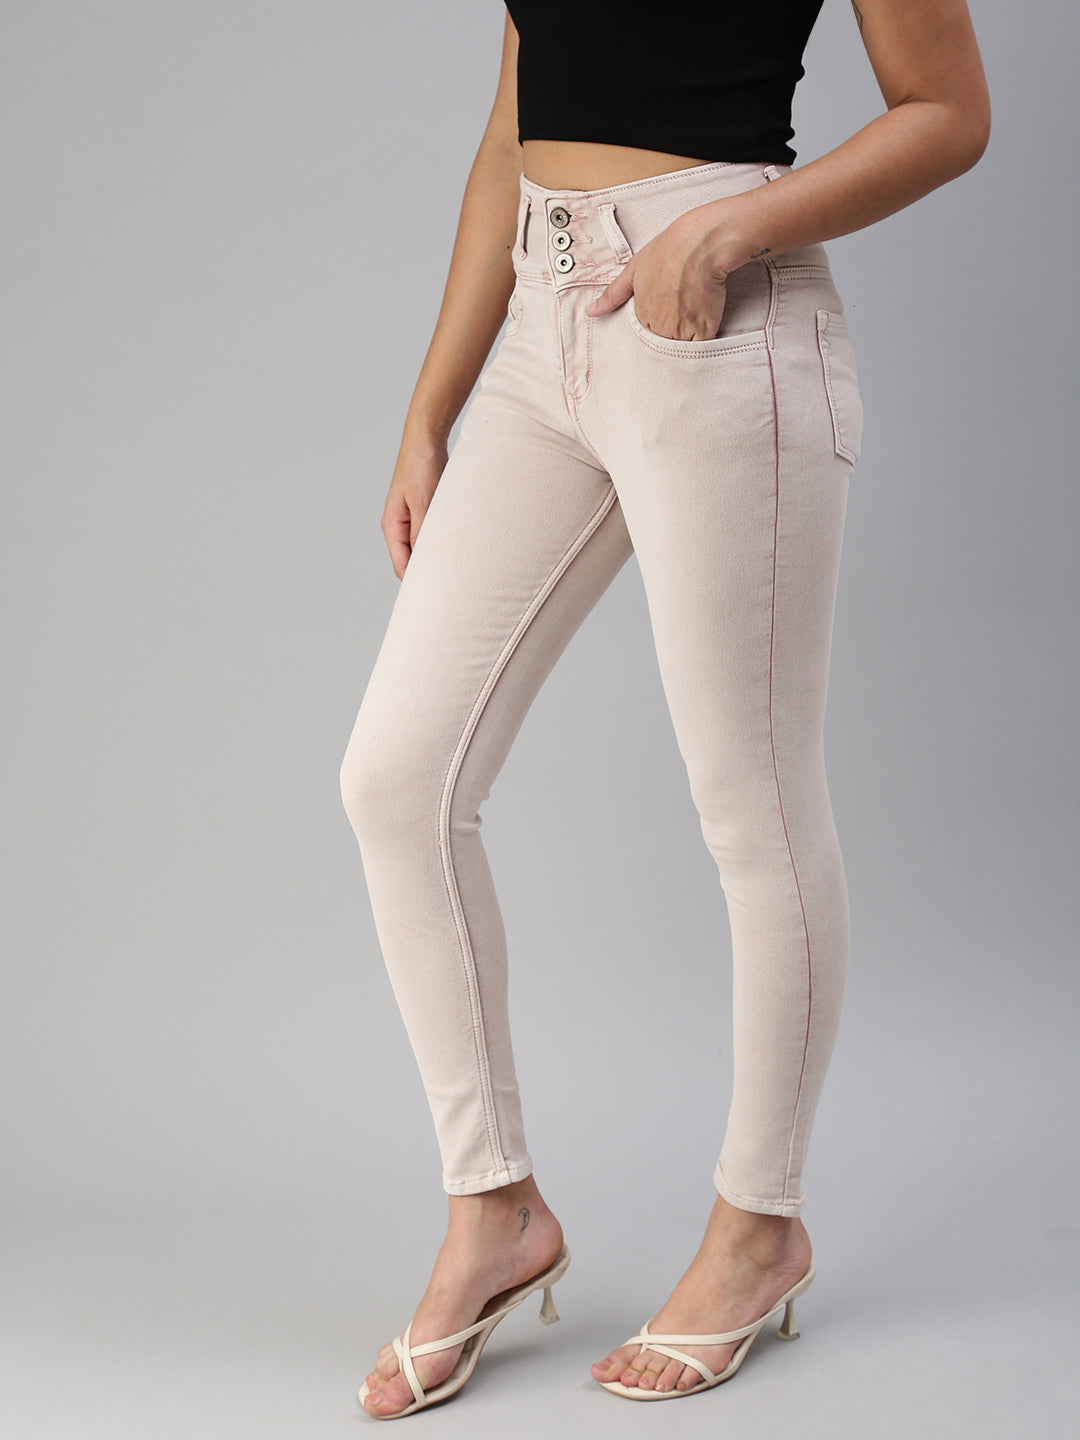 Women's Pink Solid Denim Skinny Jeans